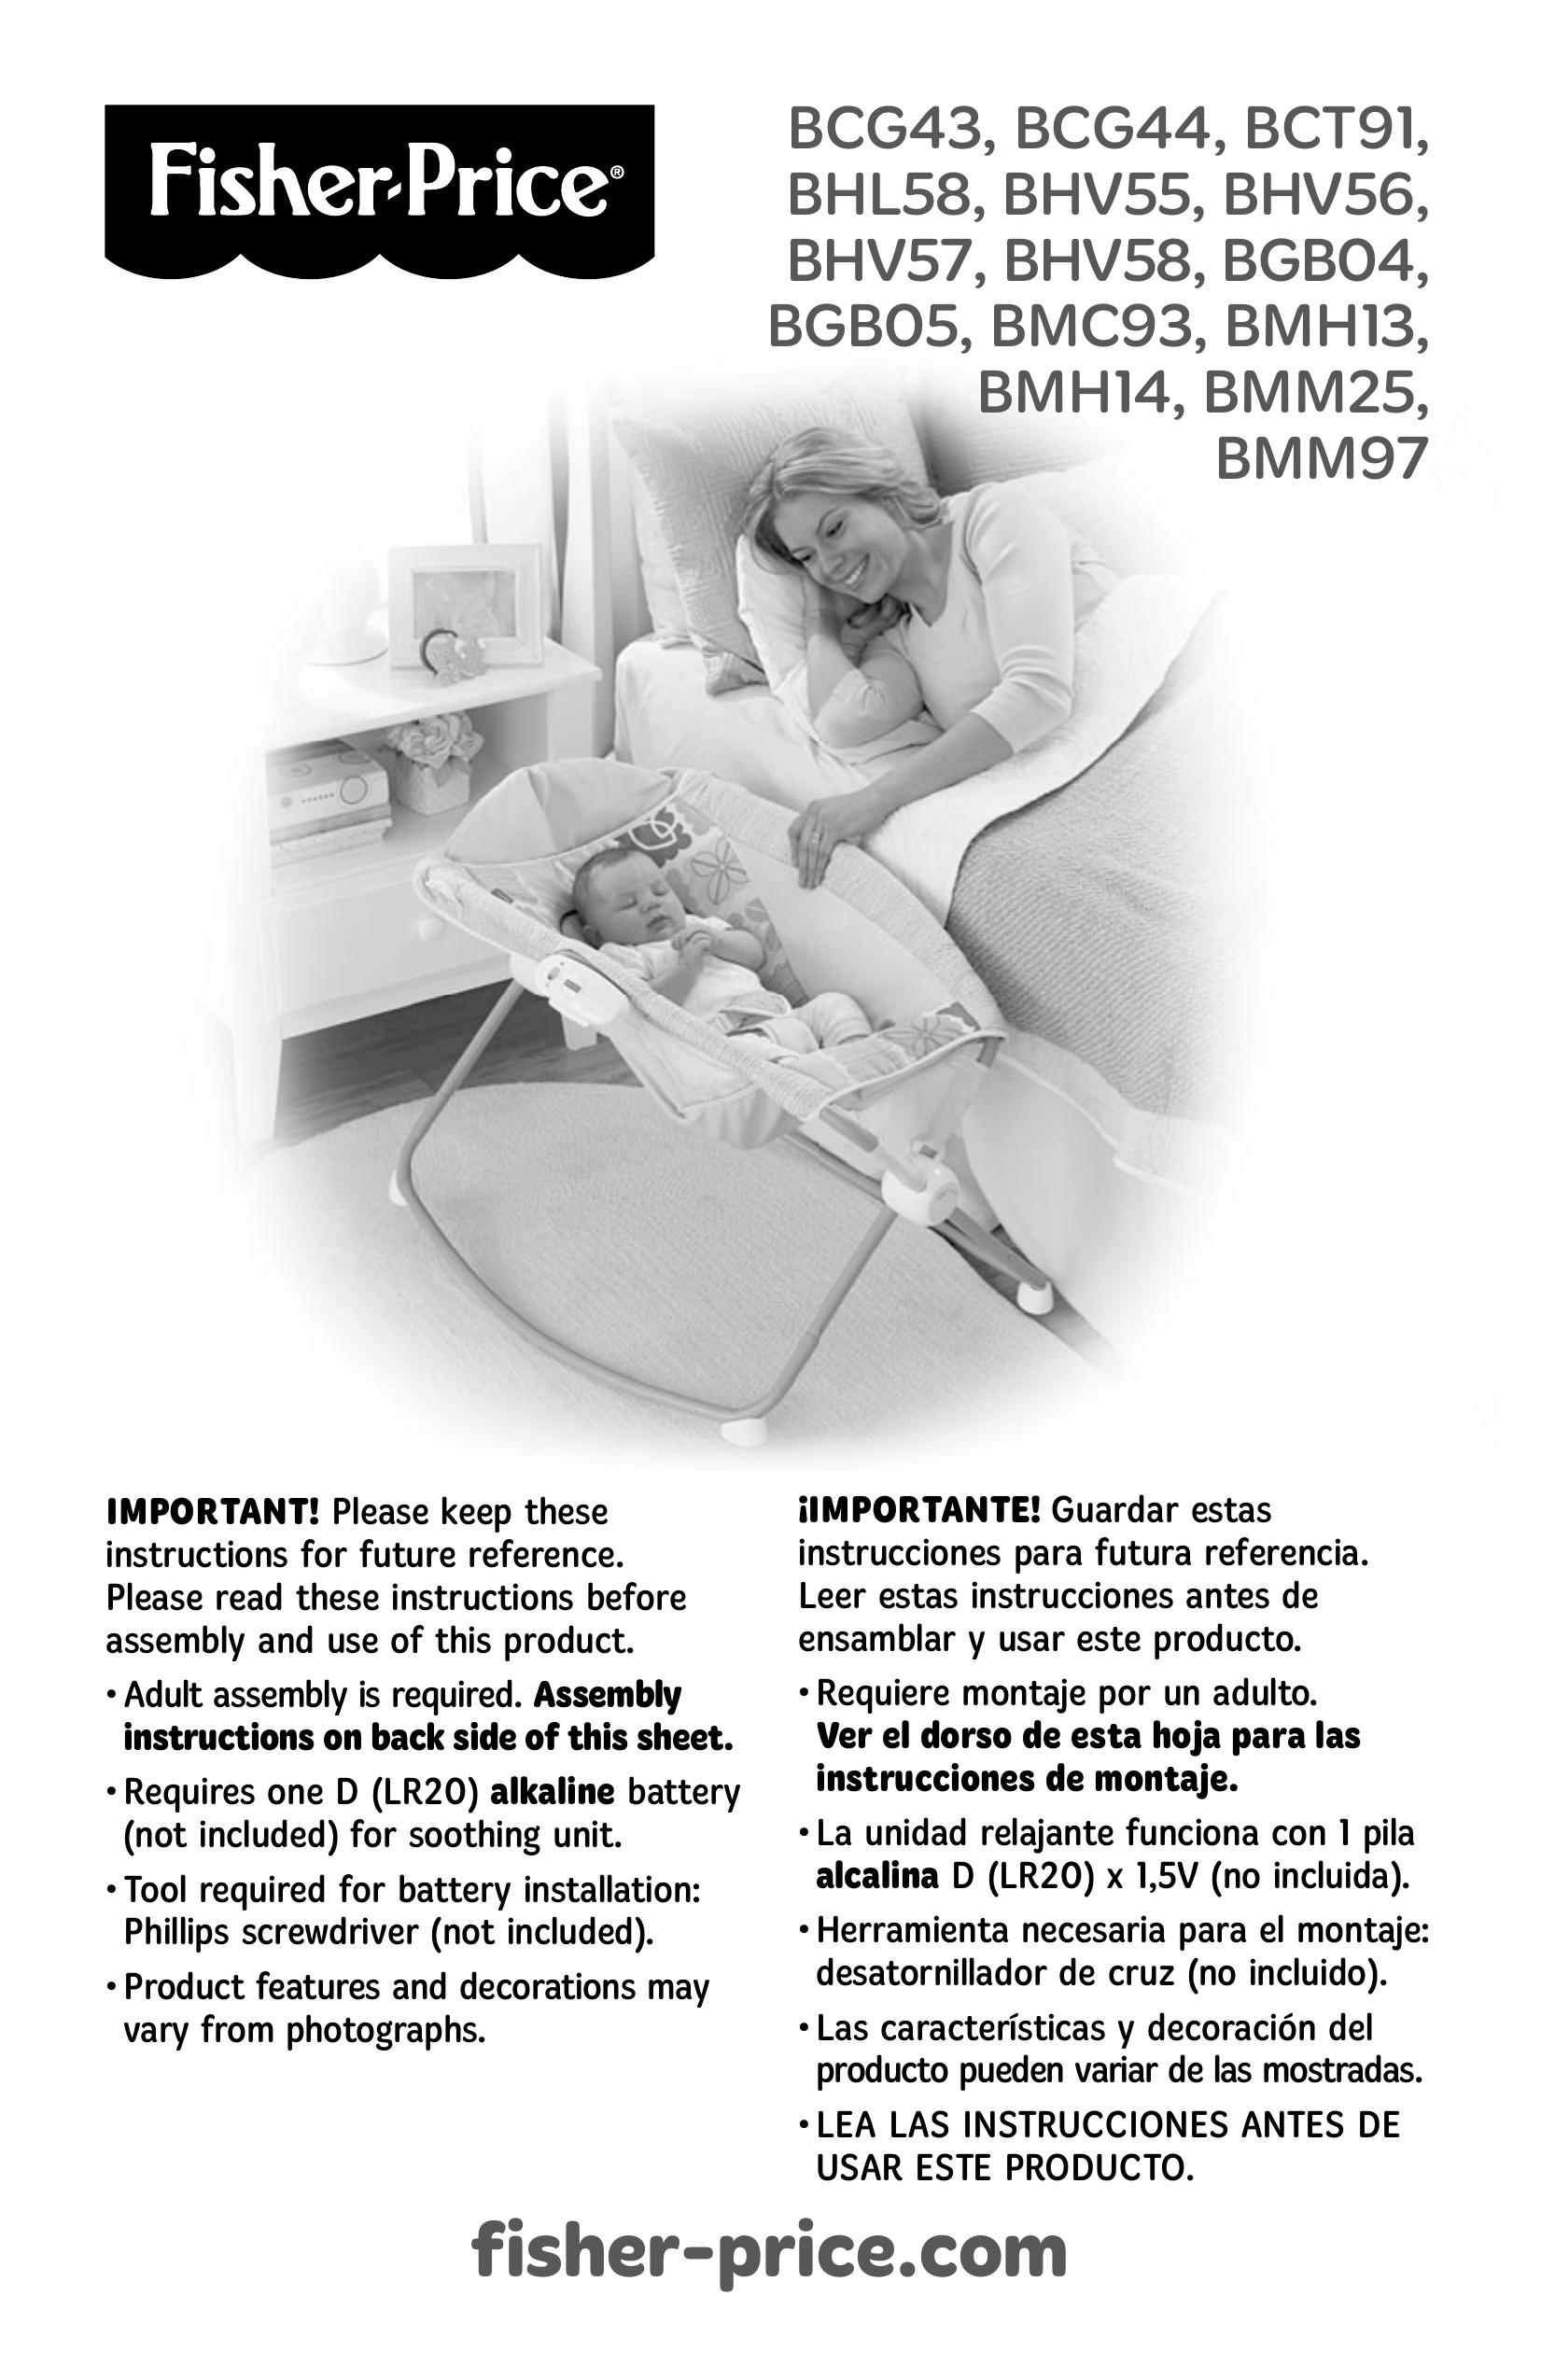 Fisher-Price BMH13 Sleep Apnea Machine User Manual